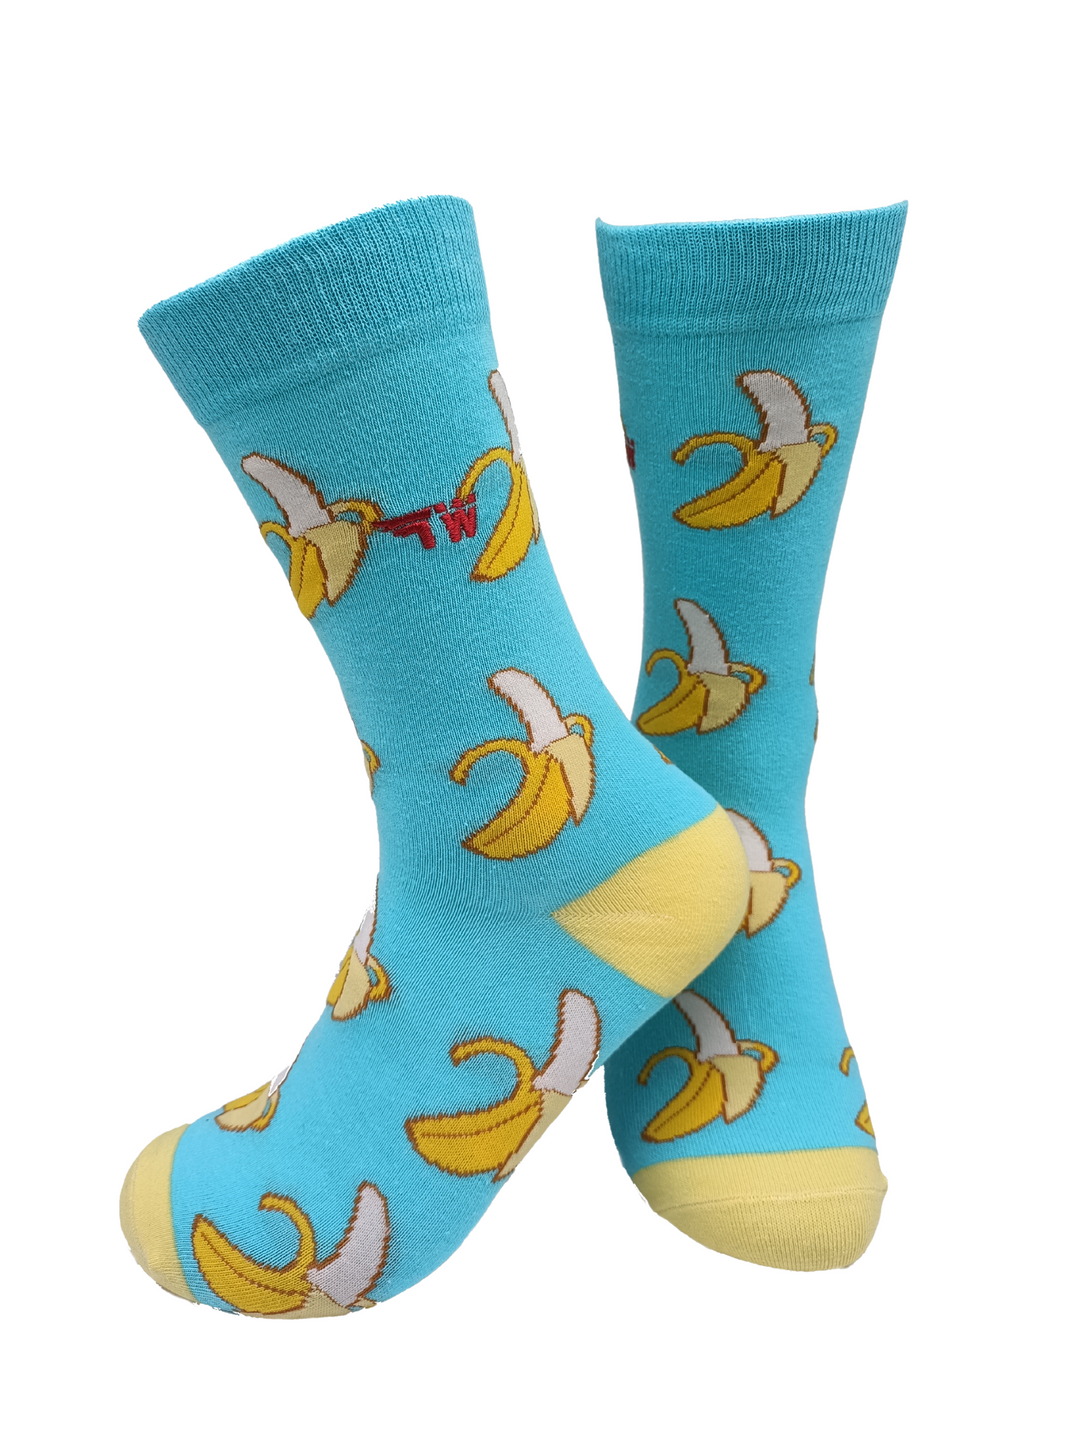 SHOCKS - Happy Feet - Big Banana